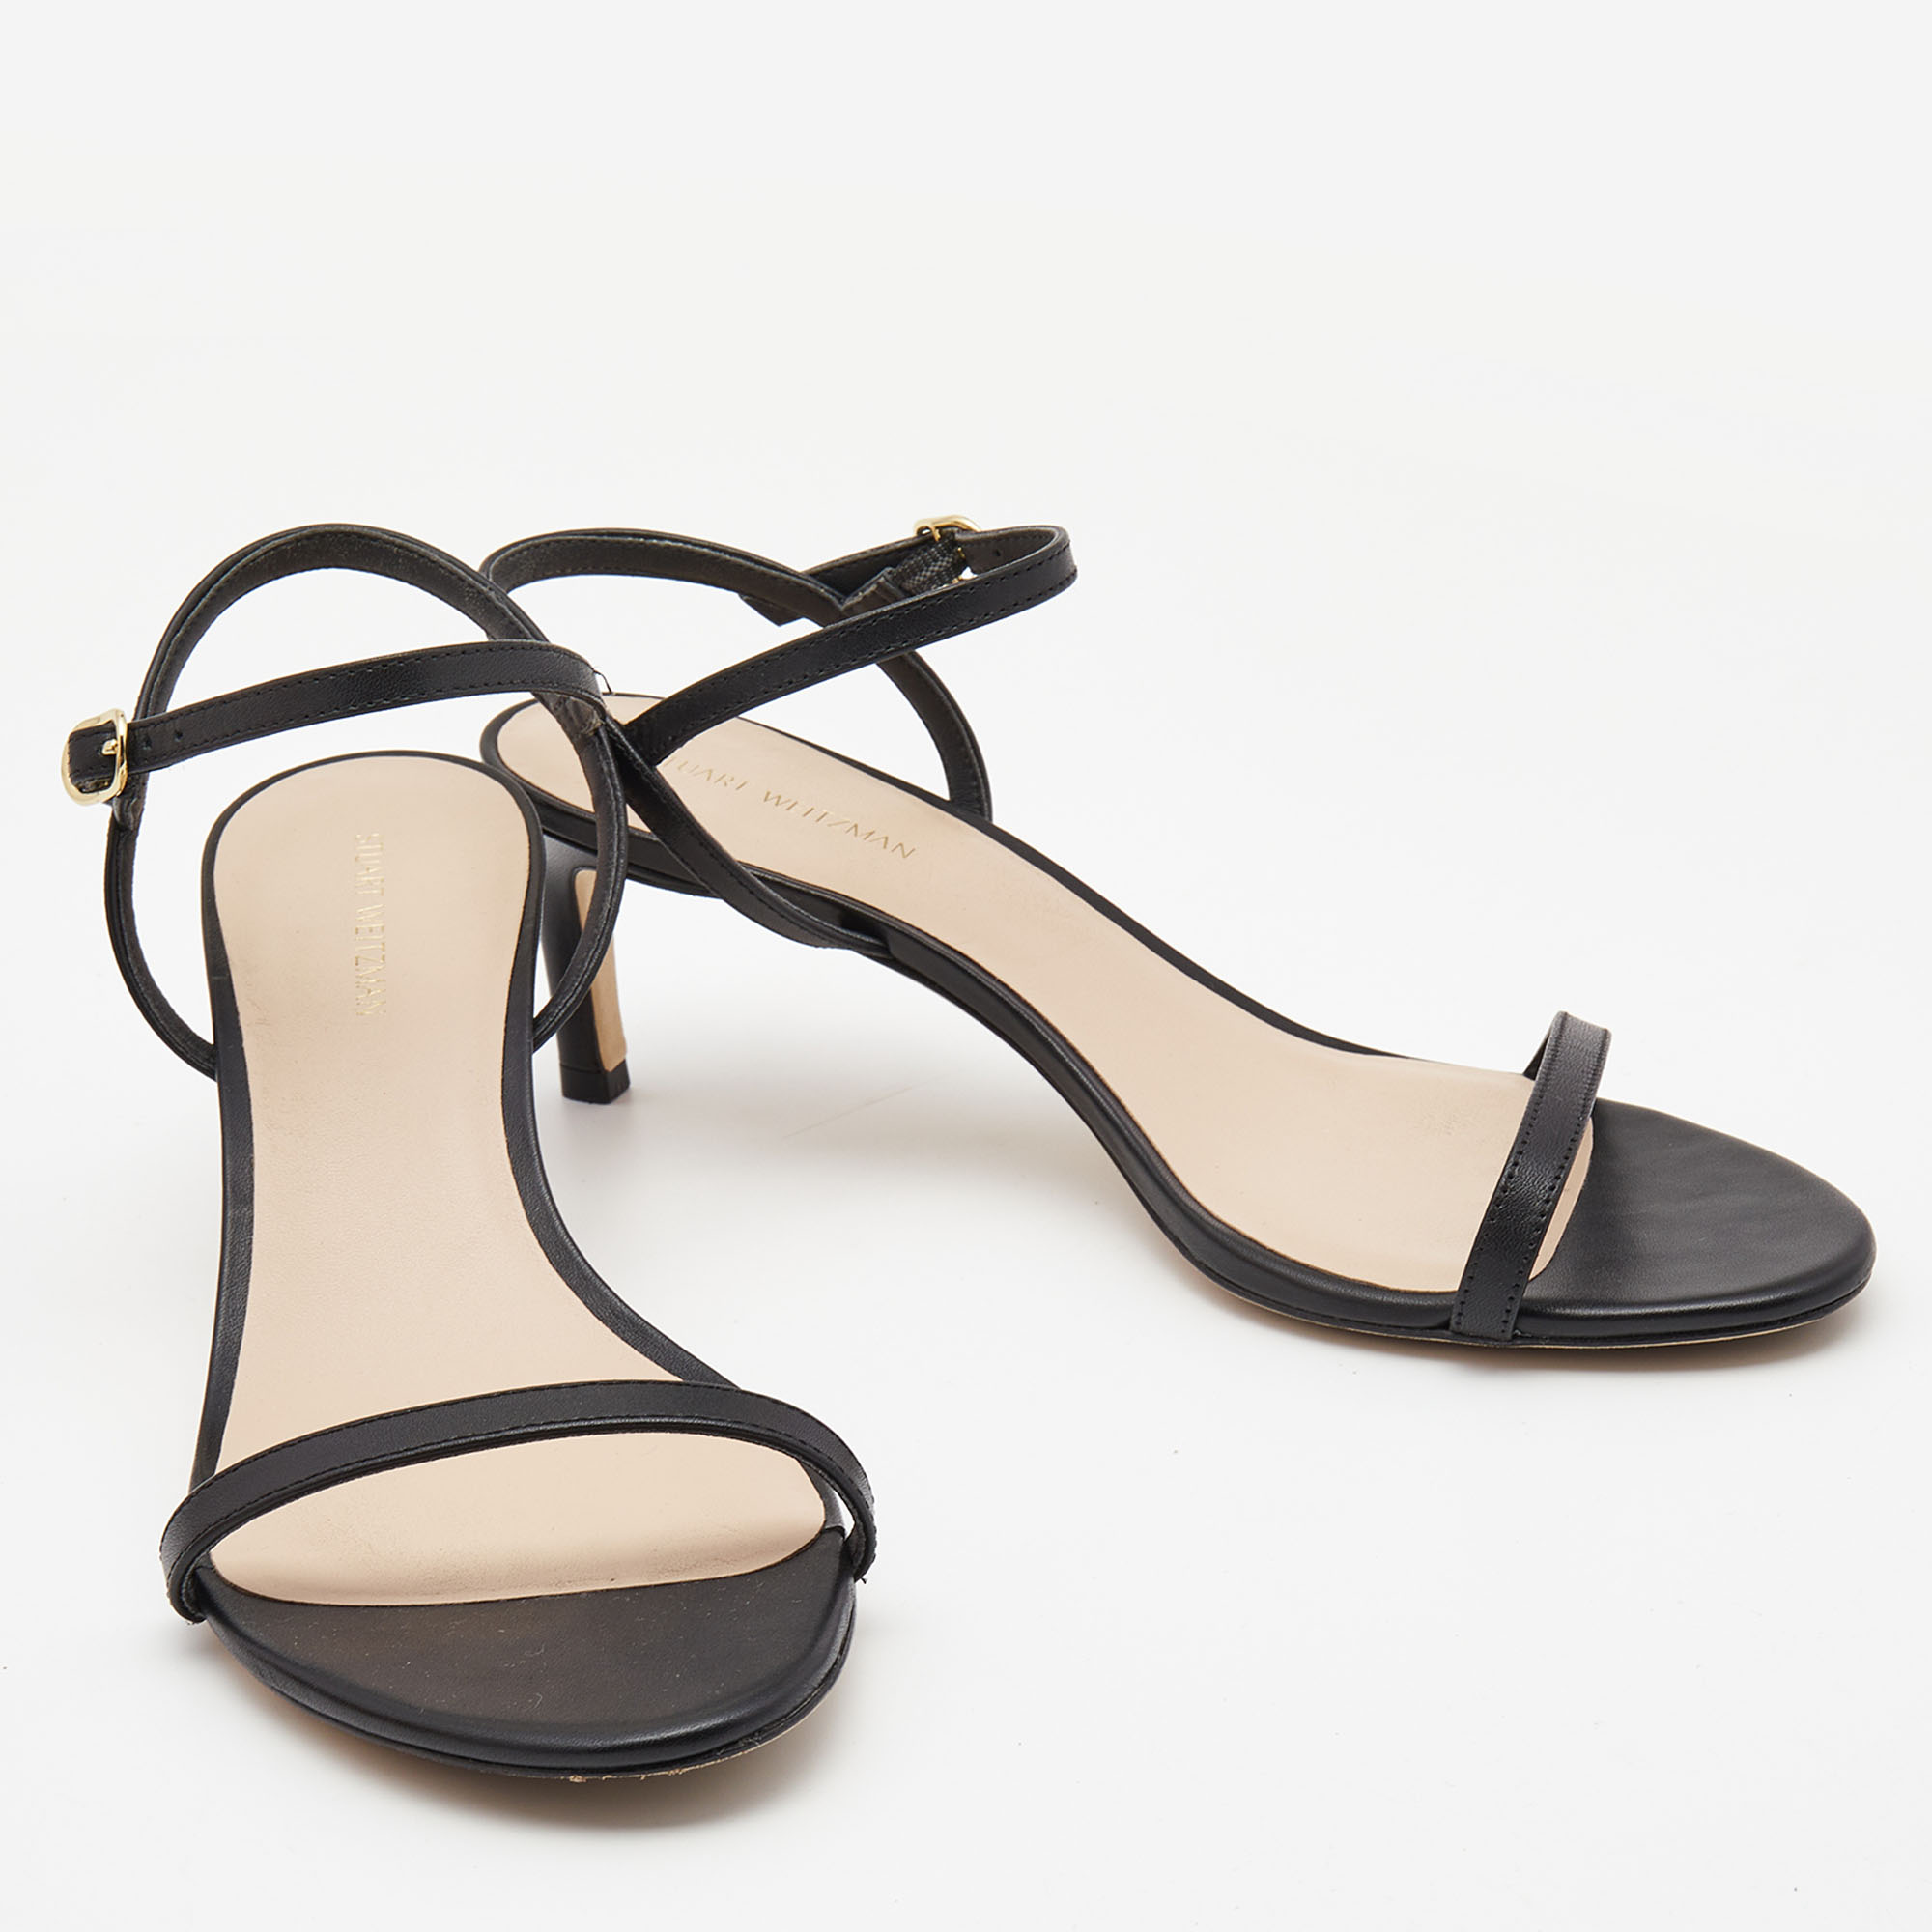 Stuart Weitzman Black Leather Ankle Strap Sandals Size 38.5